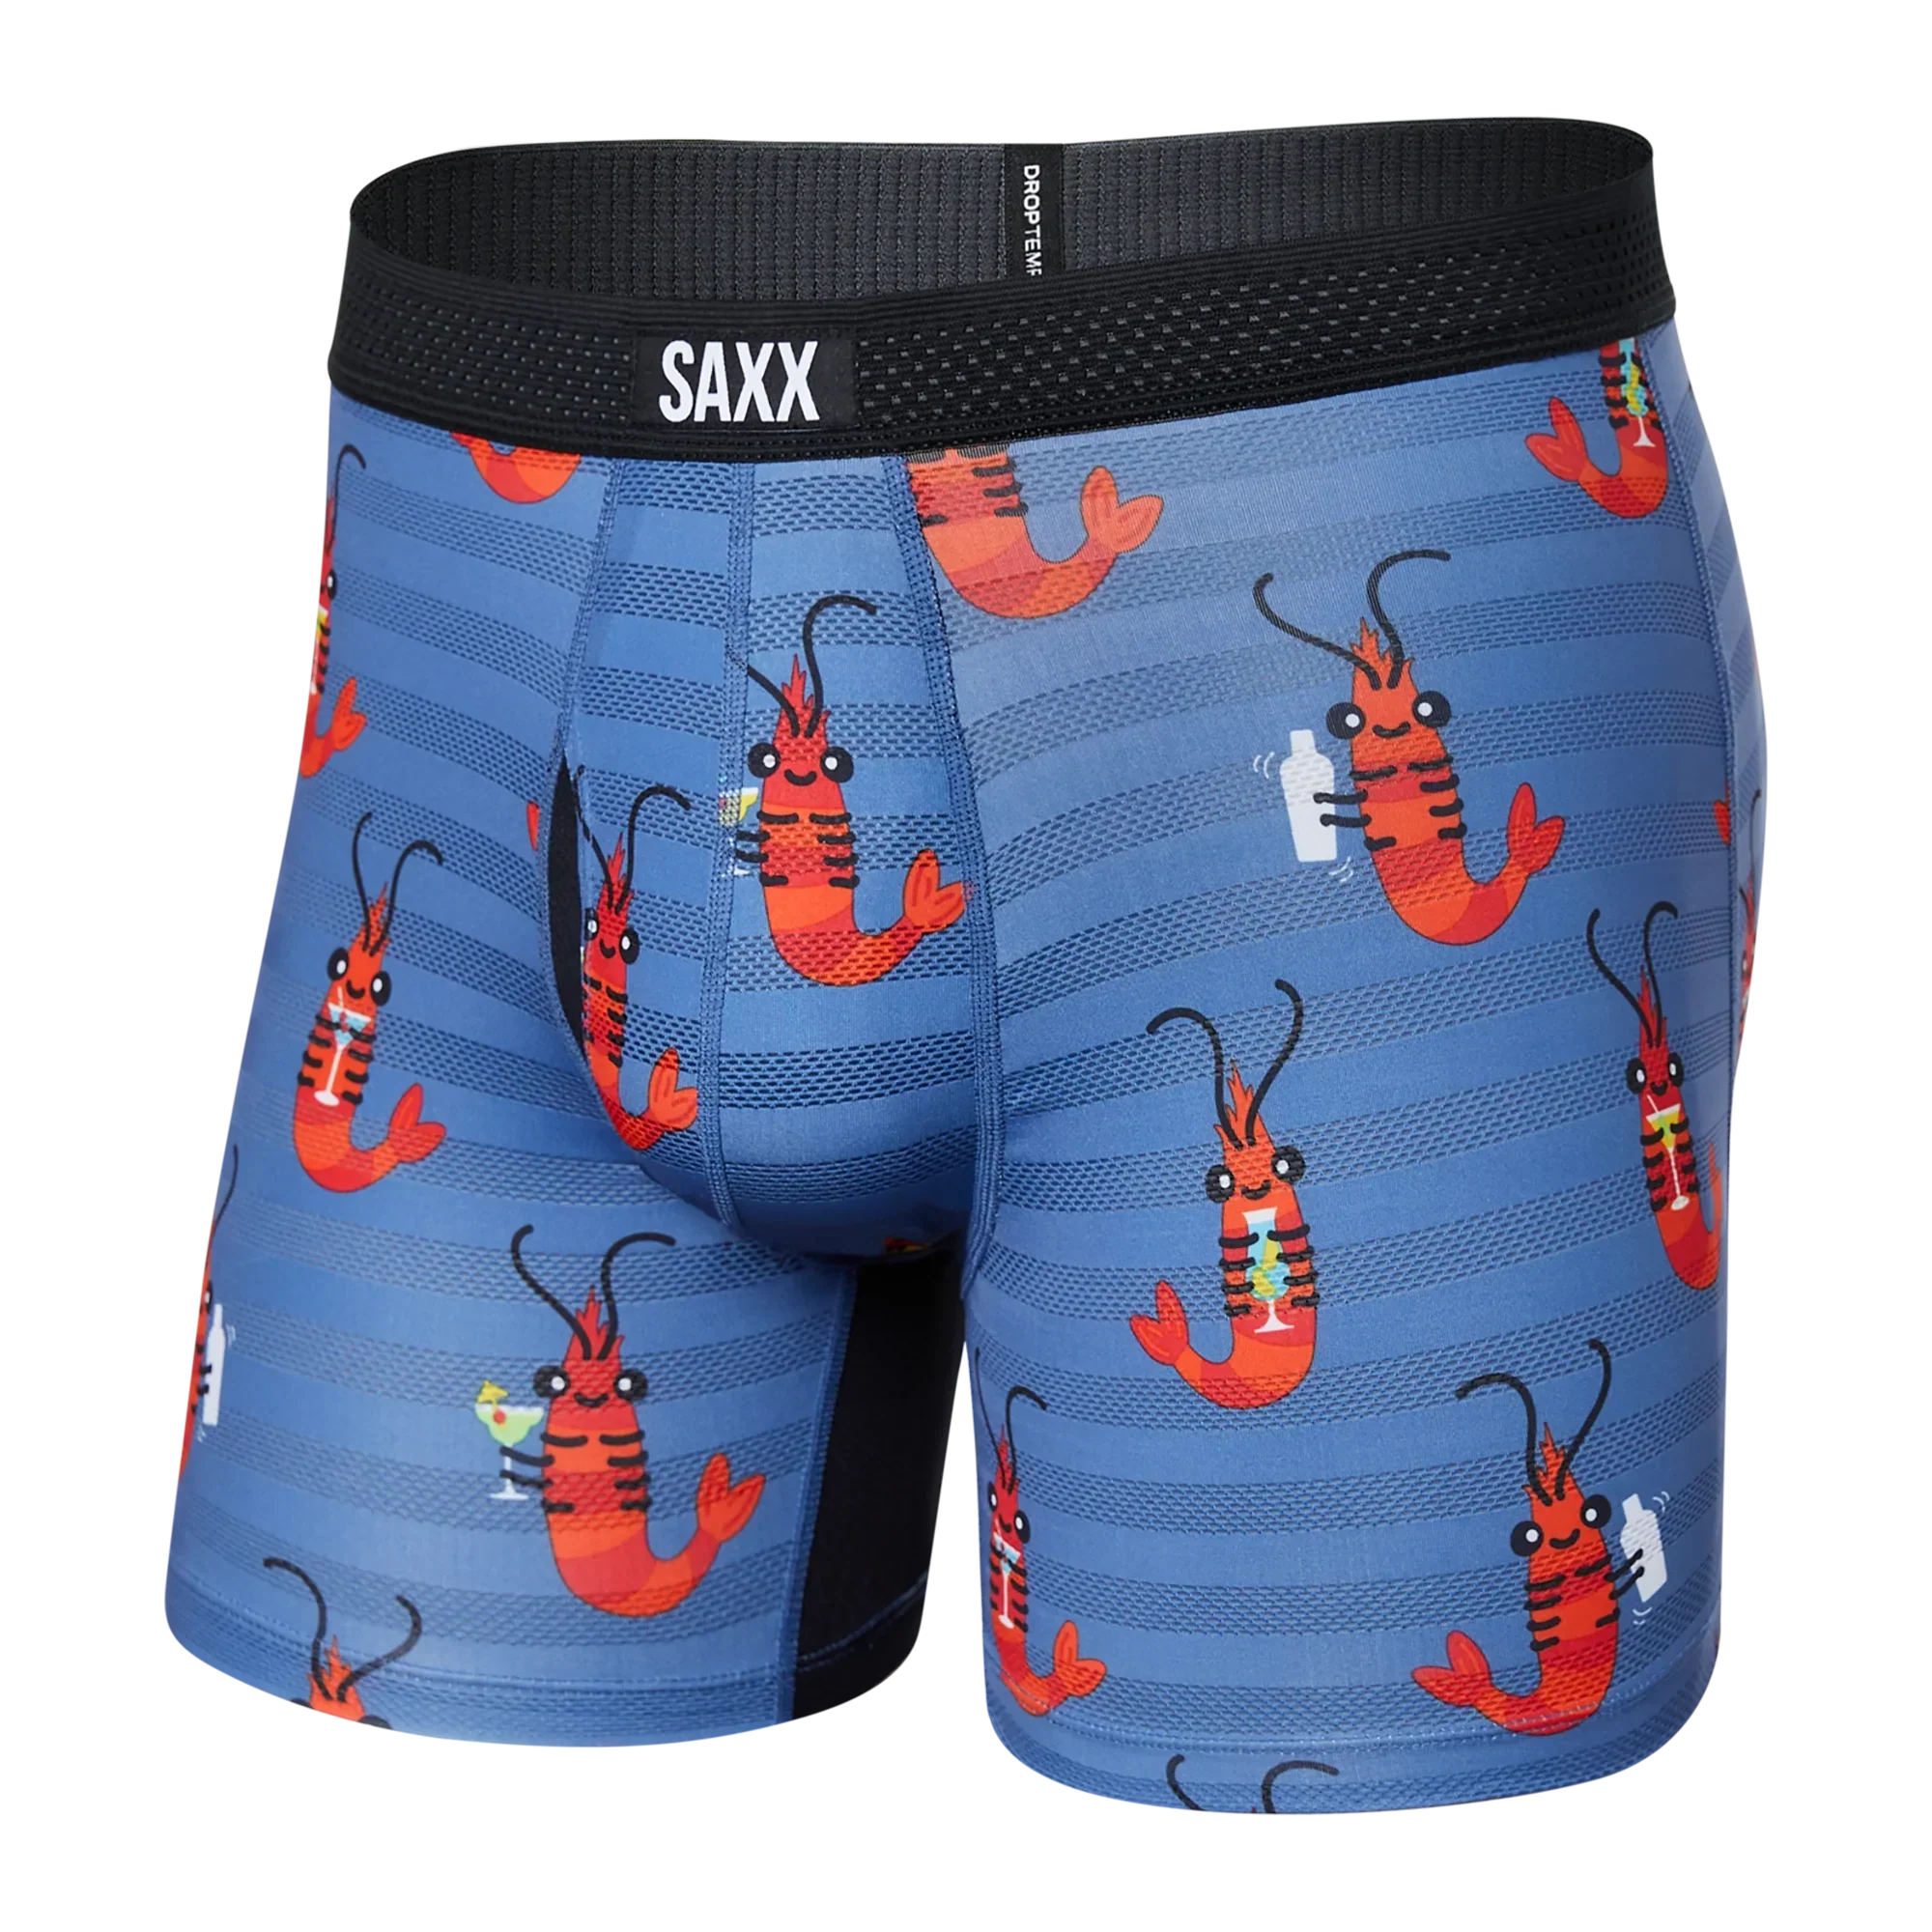 'SAXX Droptemp Cooling Mesh Boxer Brief - Shrimp Cocktail' in 'Navy' colour